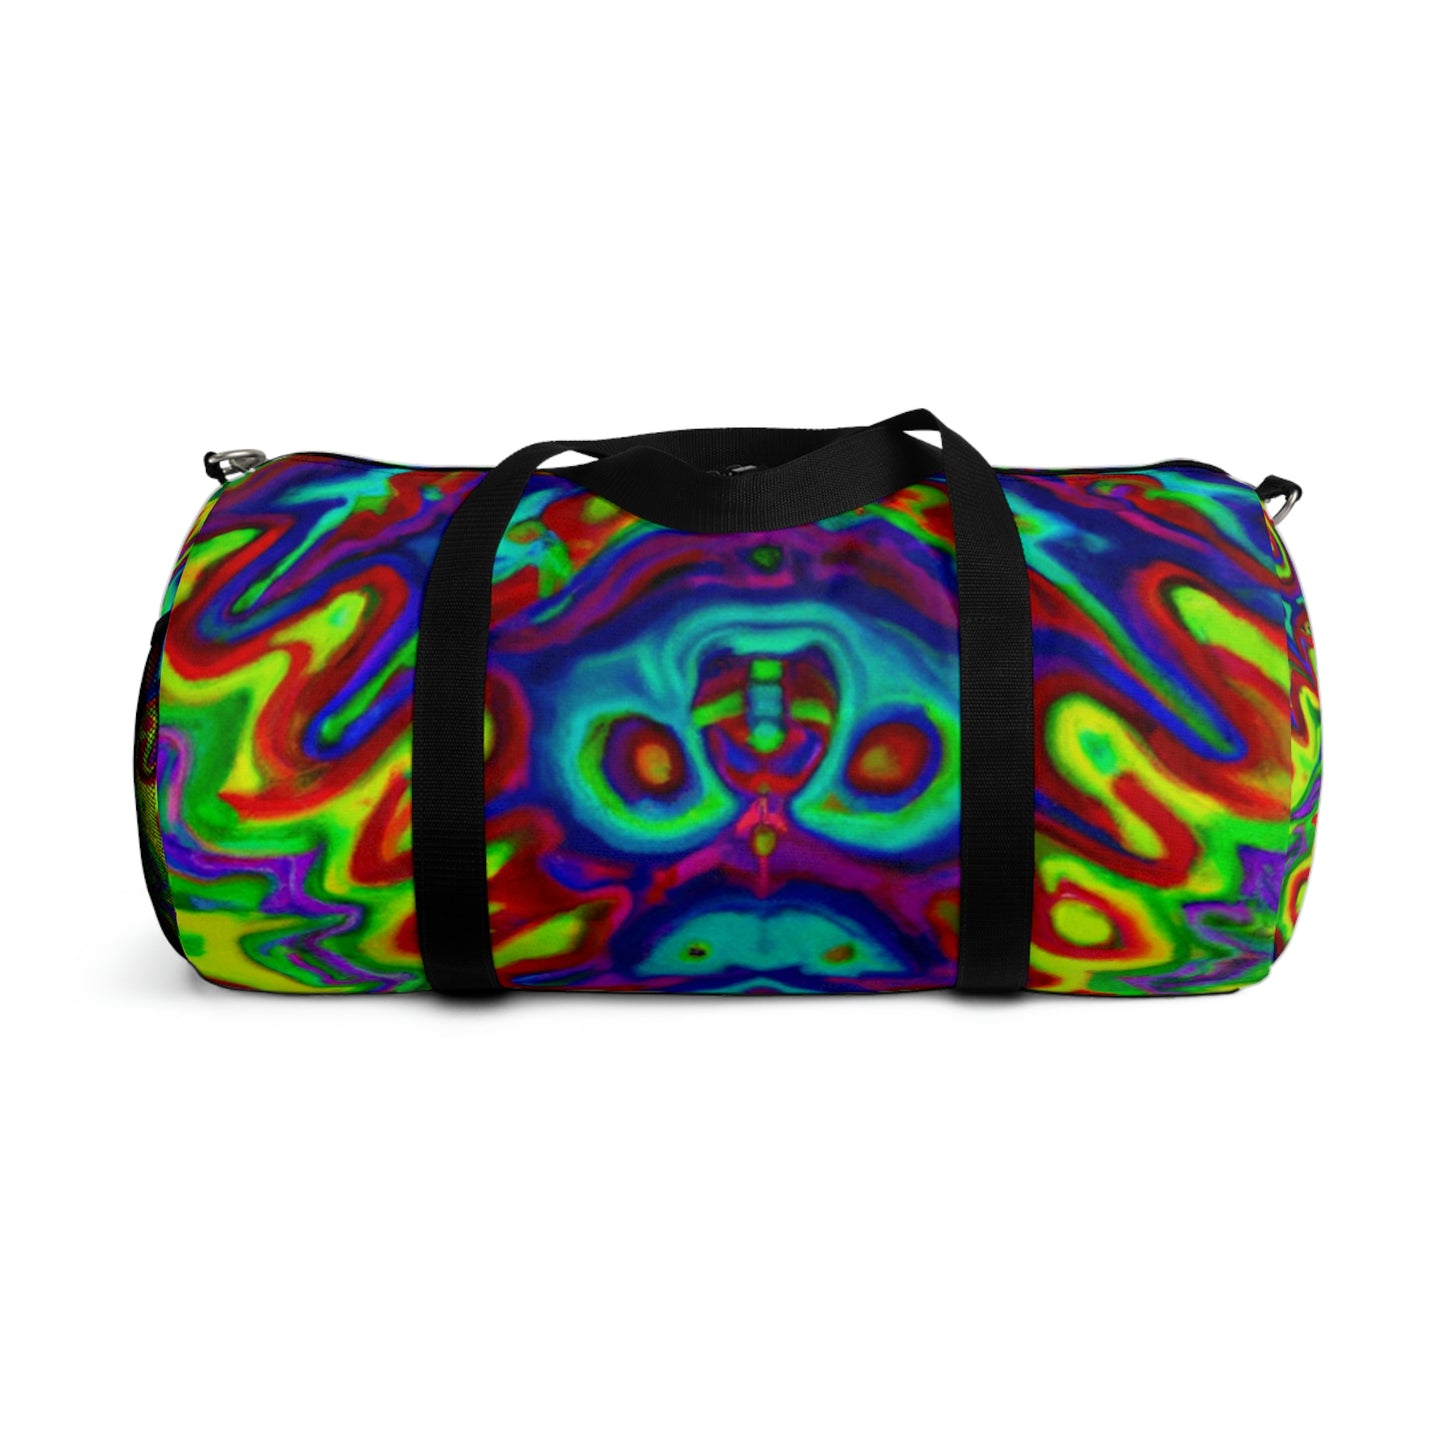 Delvinne - Psychedelic Duffel Bag